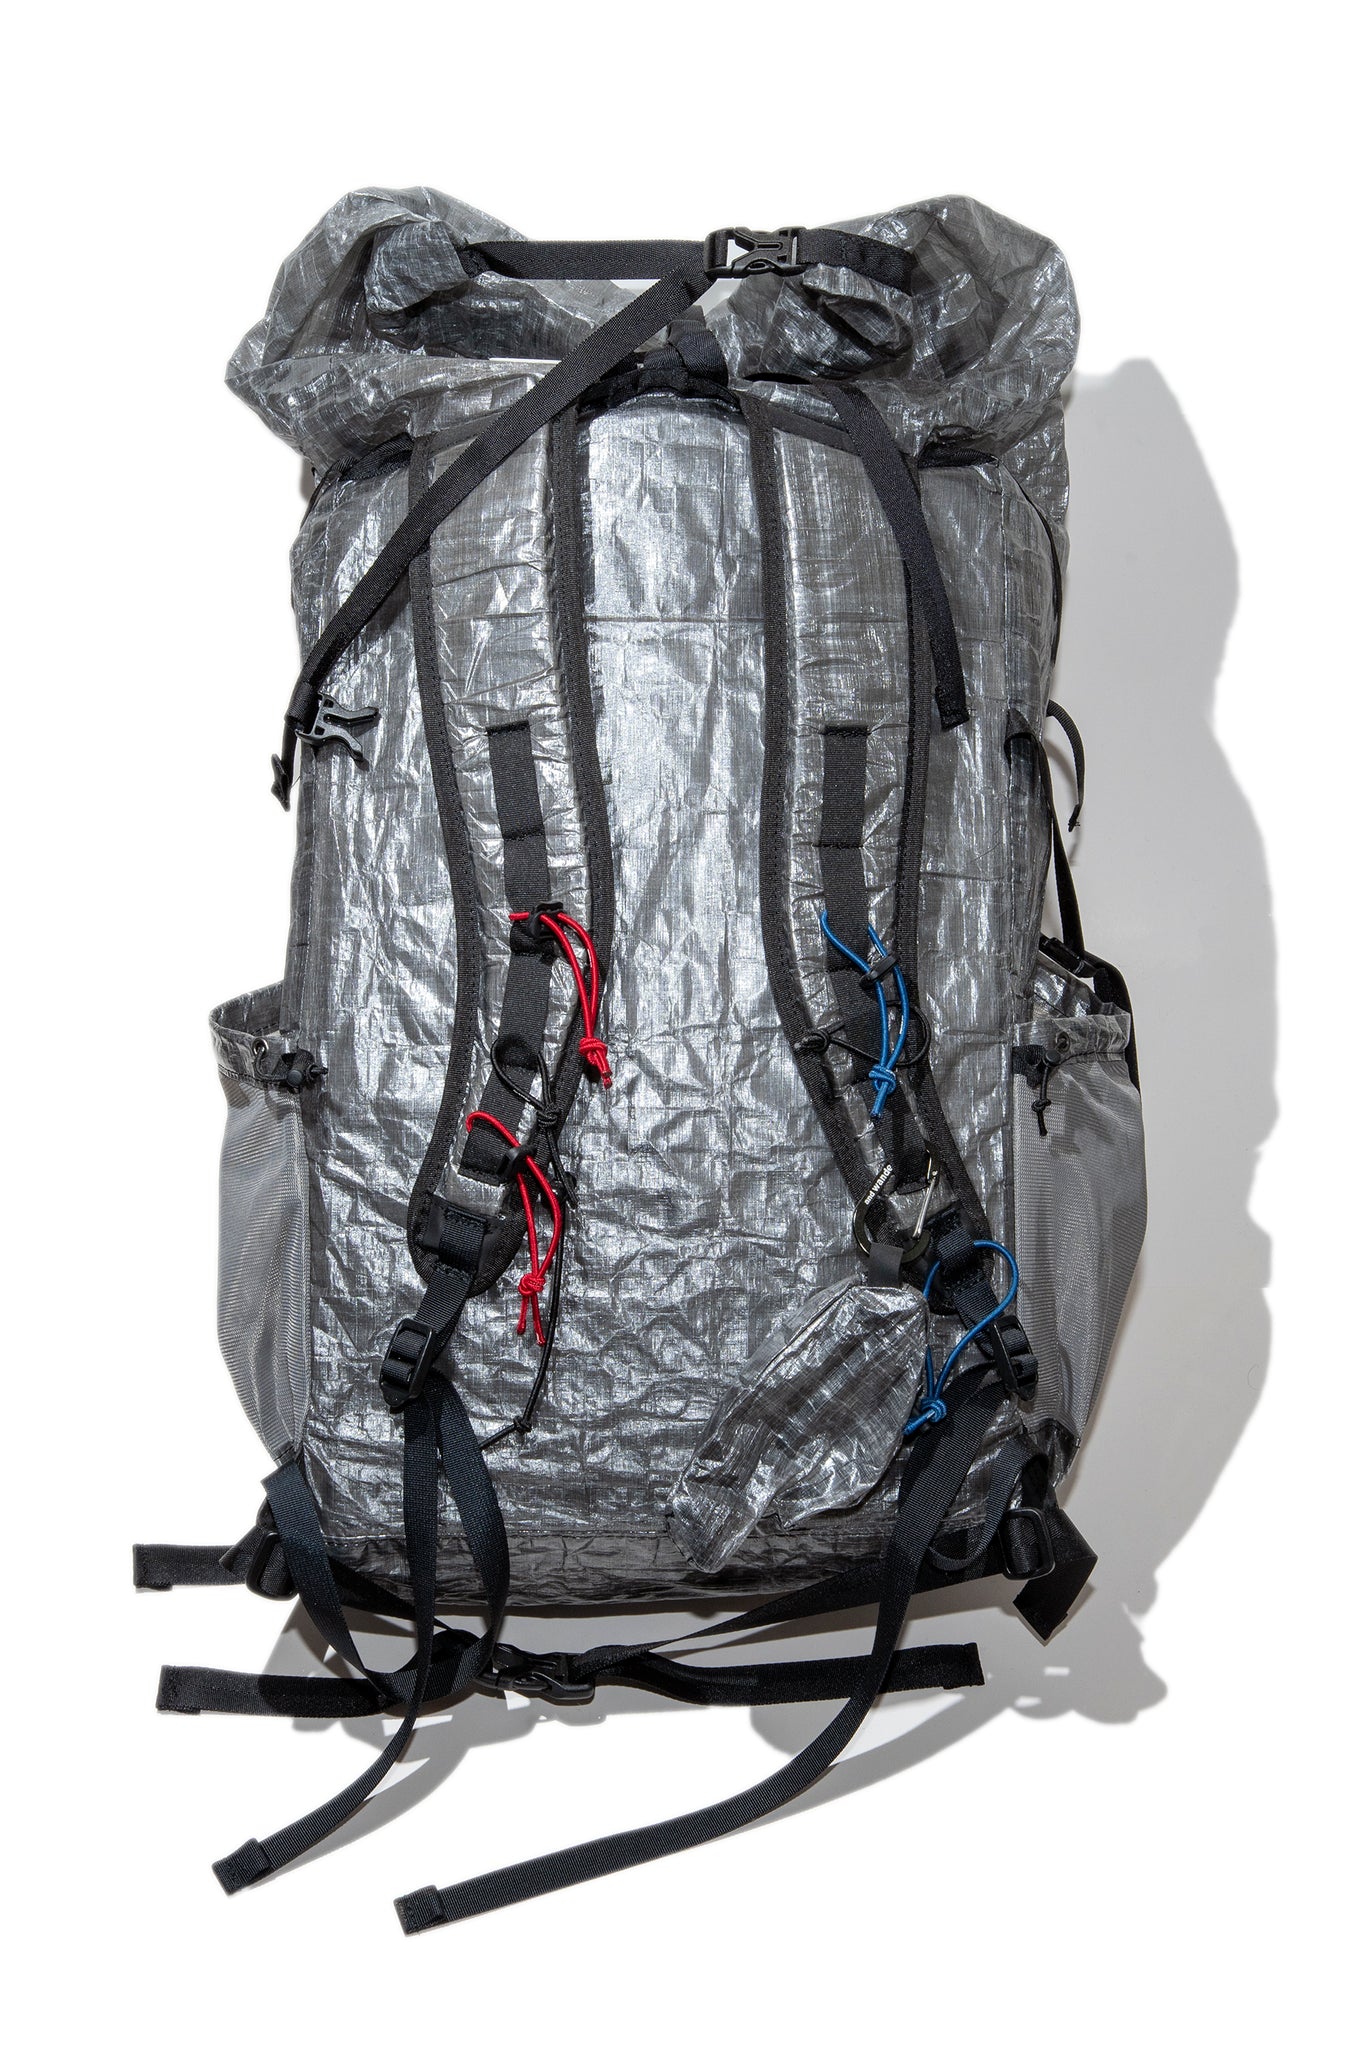 And Wander 95 Dyneema backpack